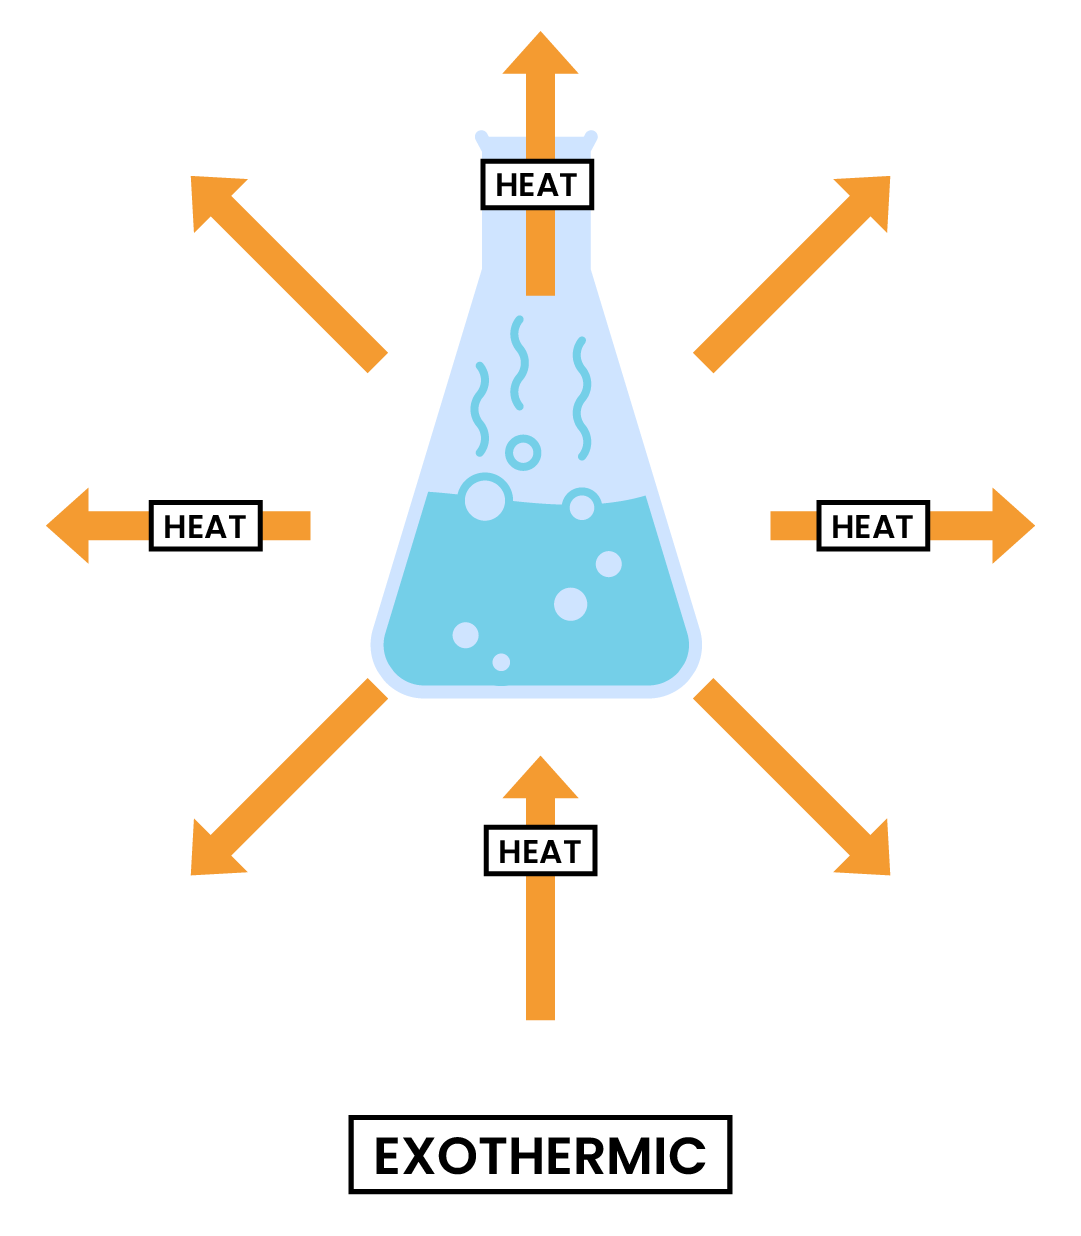 edexcel_igcse_chemistry_topic 18_energetics_001_exothermic reaction diagram labelled